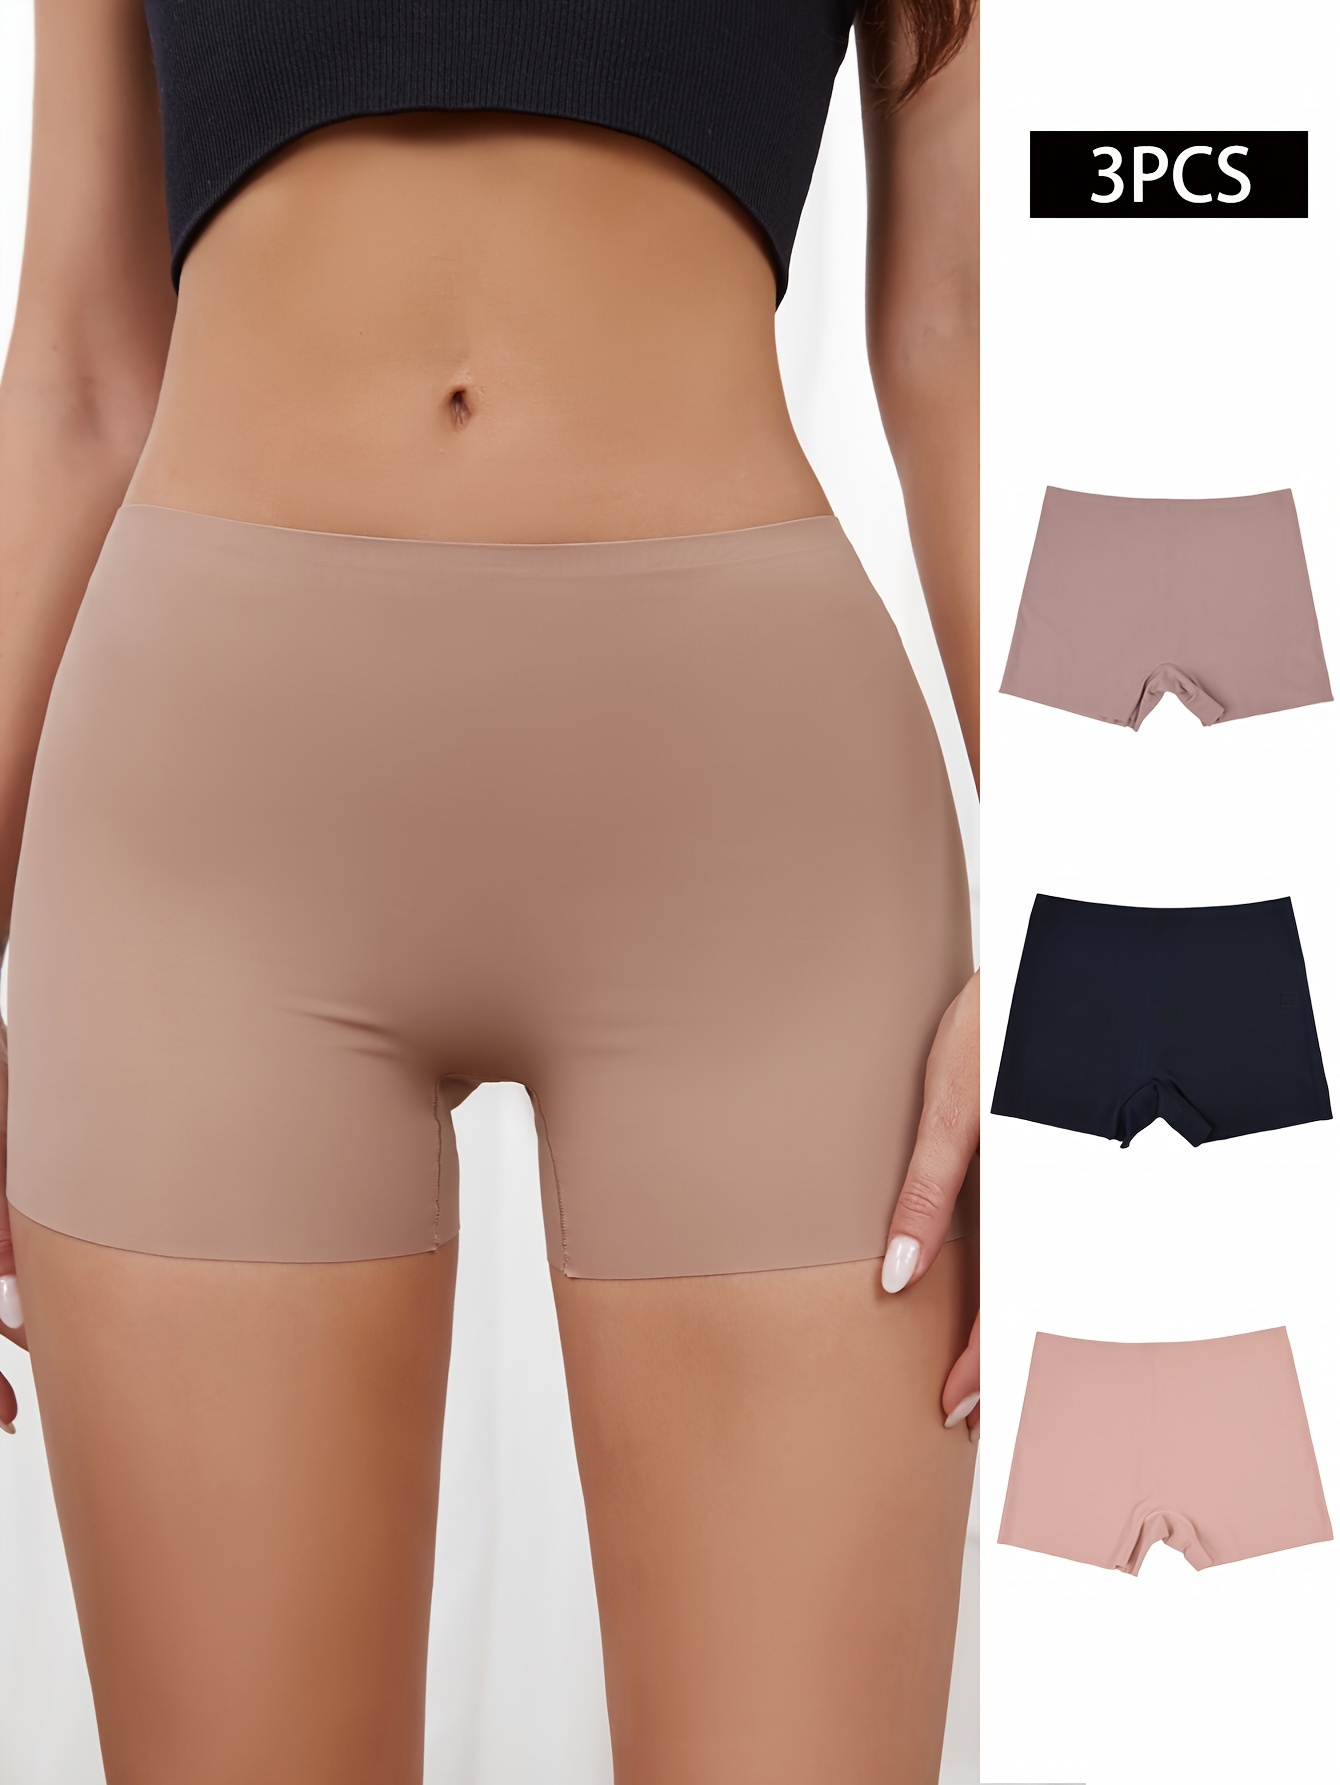 3pcs Seamless Solid Boyshort Panties, Soft & Comfortable Stretch Panties,  Women's Lingerie & Underwear